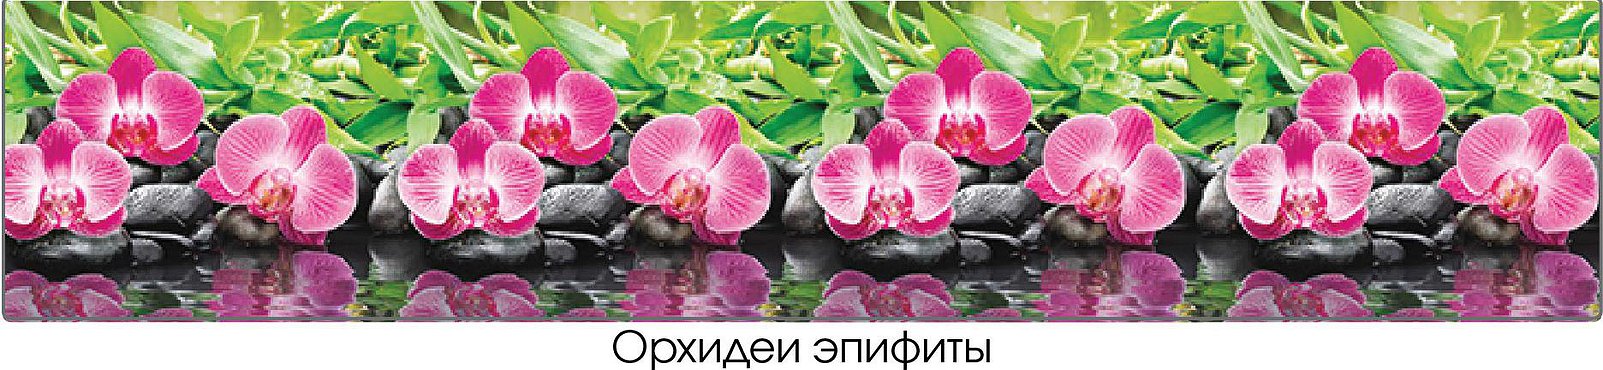 Панель интерьер. Орхидеи эпифиты 3000*600*1,0мм (Россия)